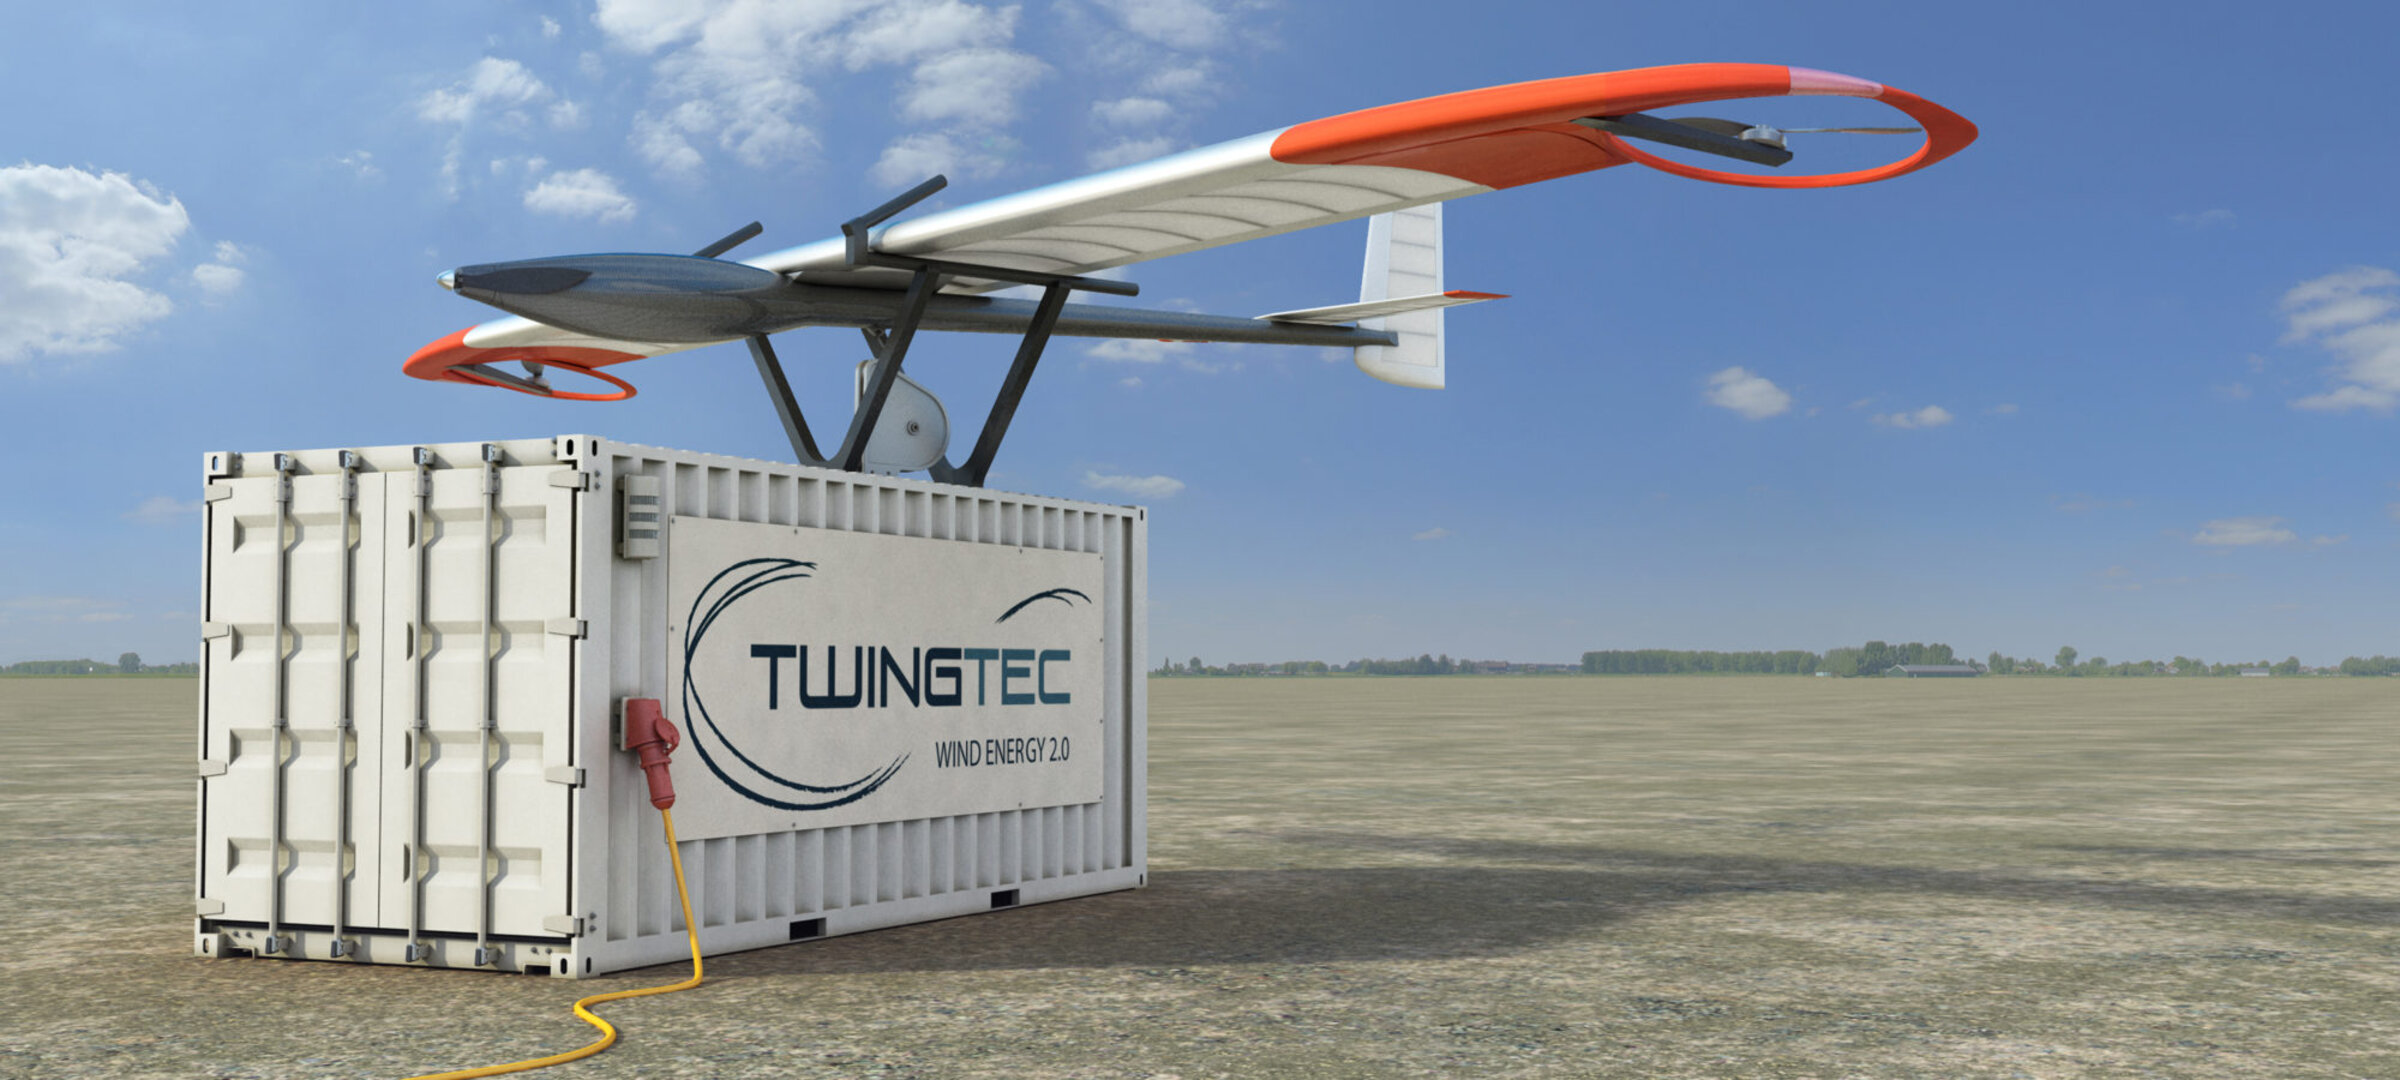 TwingTec drone on base 